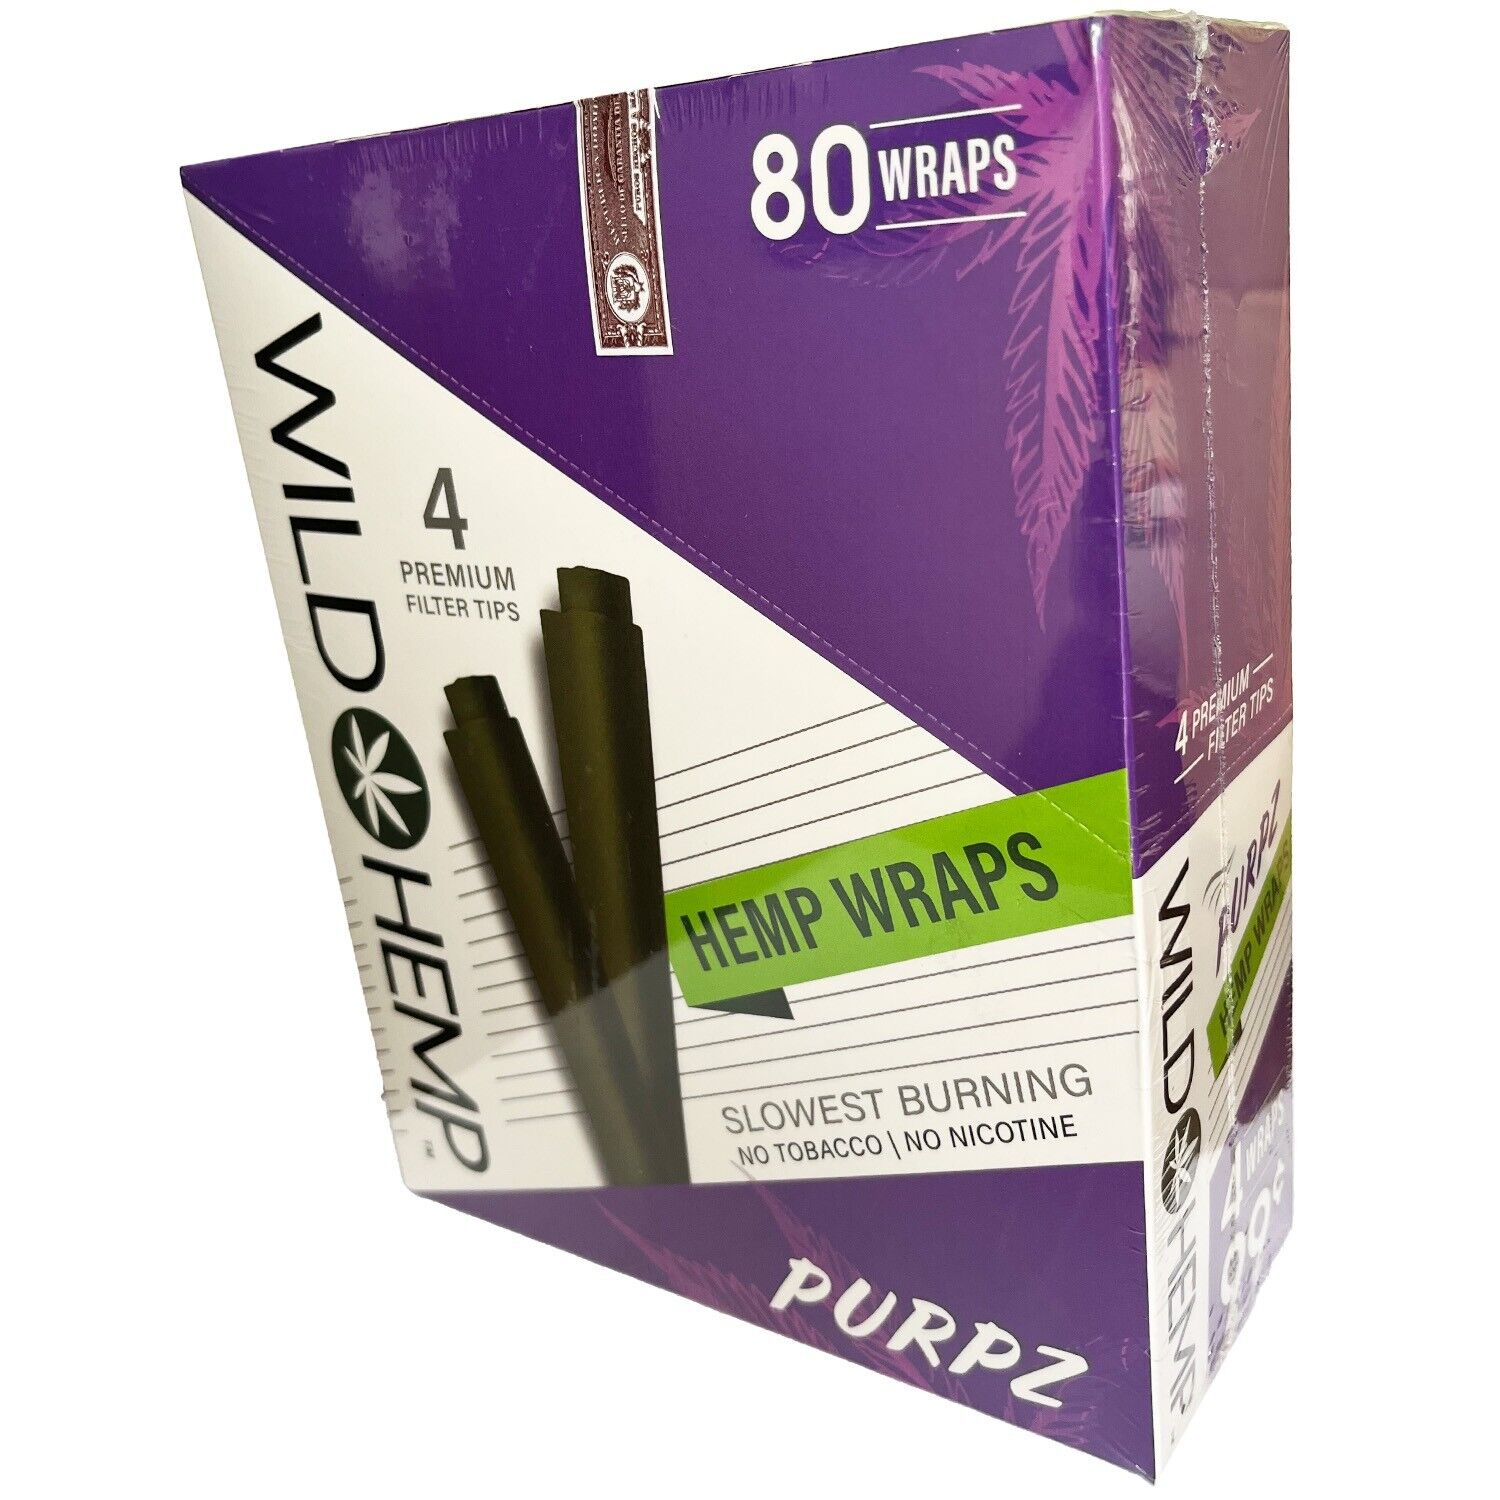 Wild H. Purpz Wraps Rolling Paper Full Box 20 Pouches / 4 per Pack